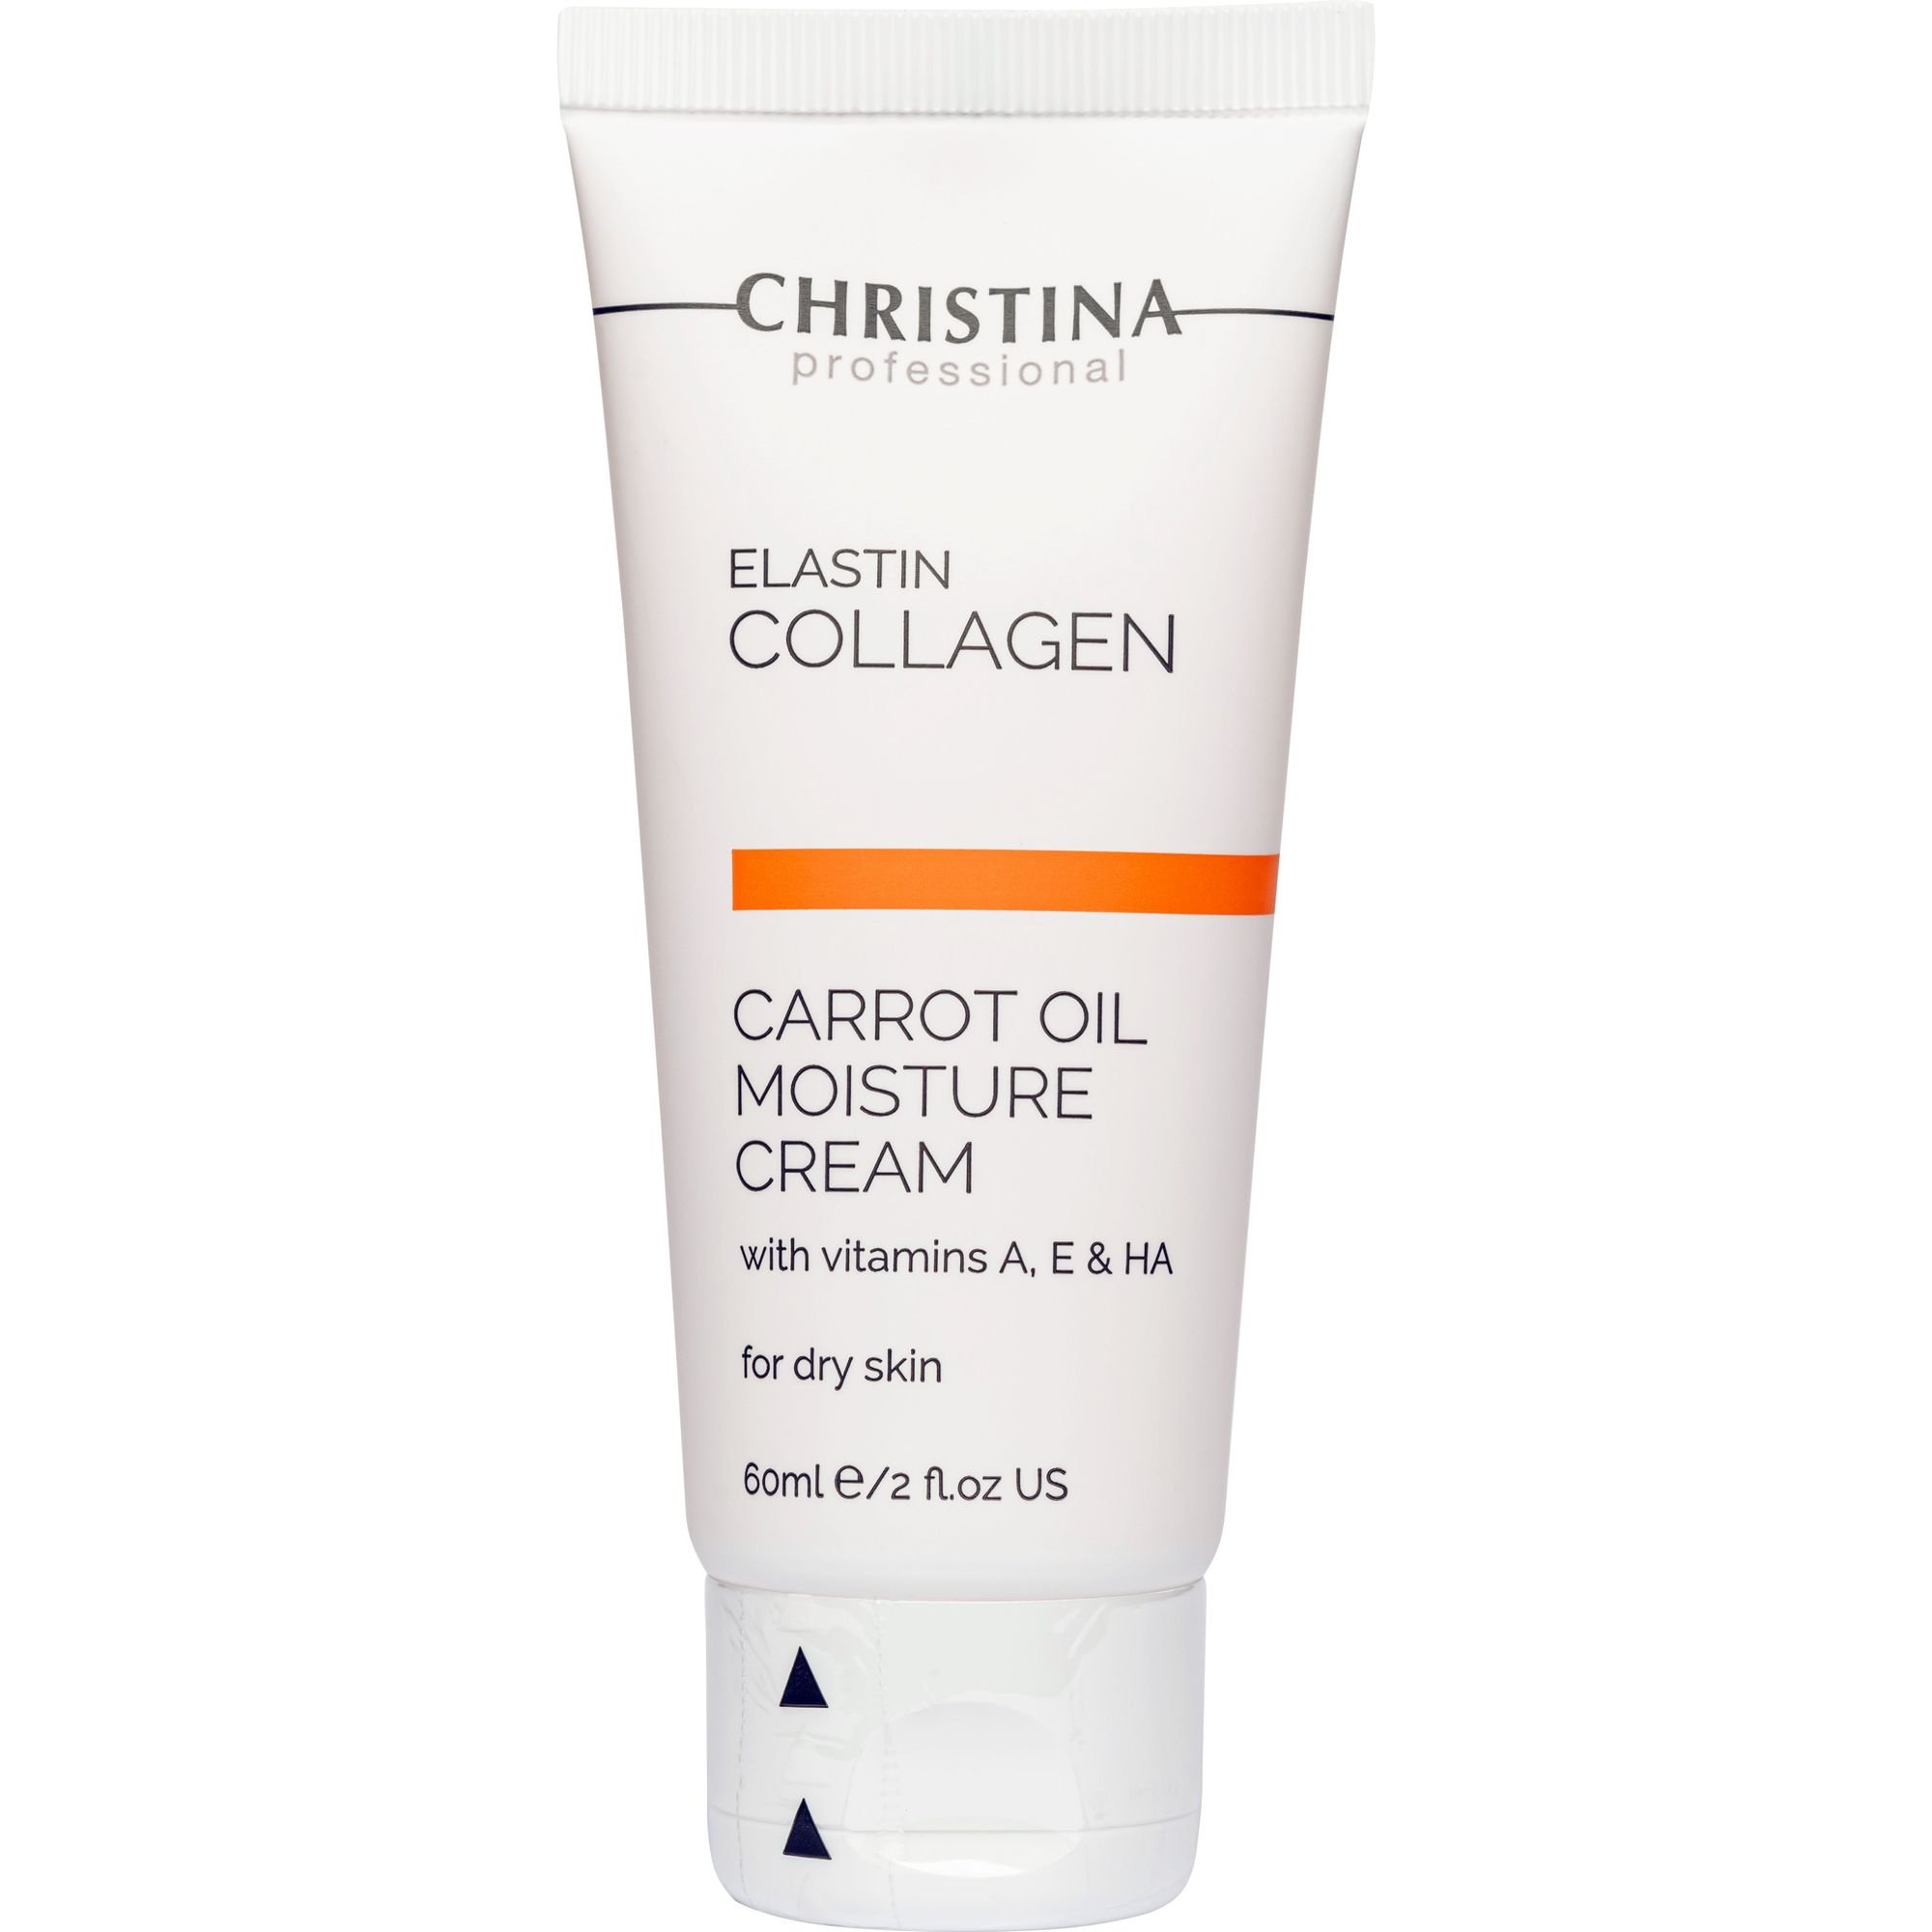 Увлажняющий крем для сухой кожи Christina Elastin Collagen Carrot Oil Moisture Cream With Vitamins A, E & HA 60 мл - фото 1